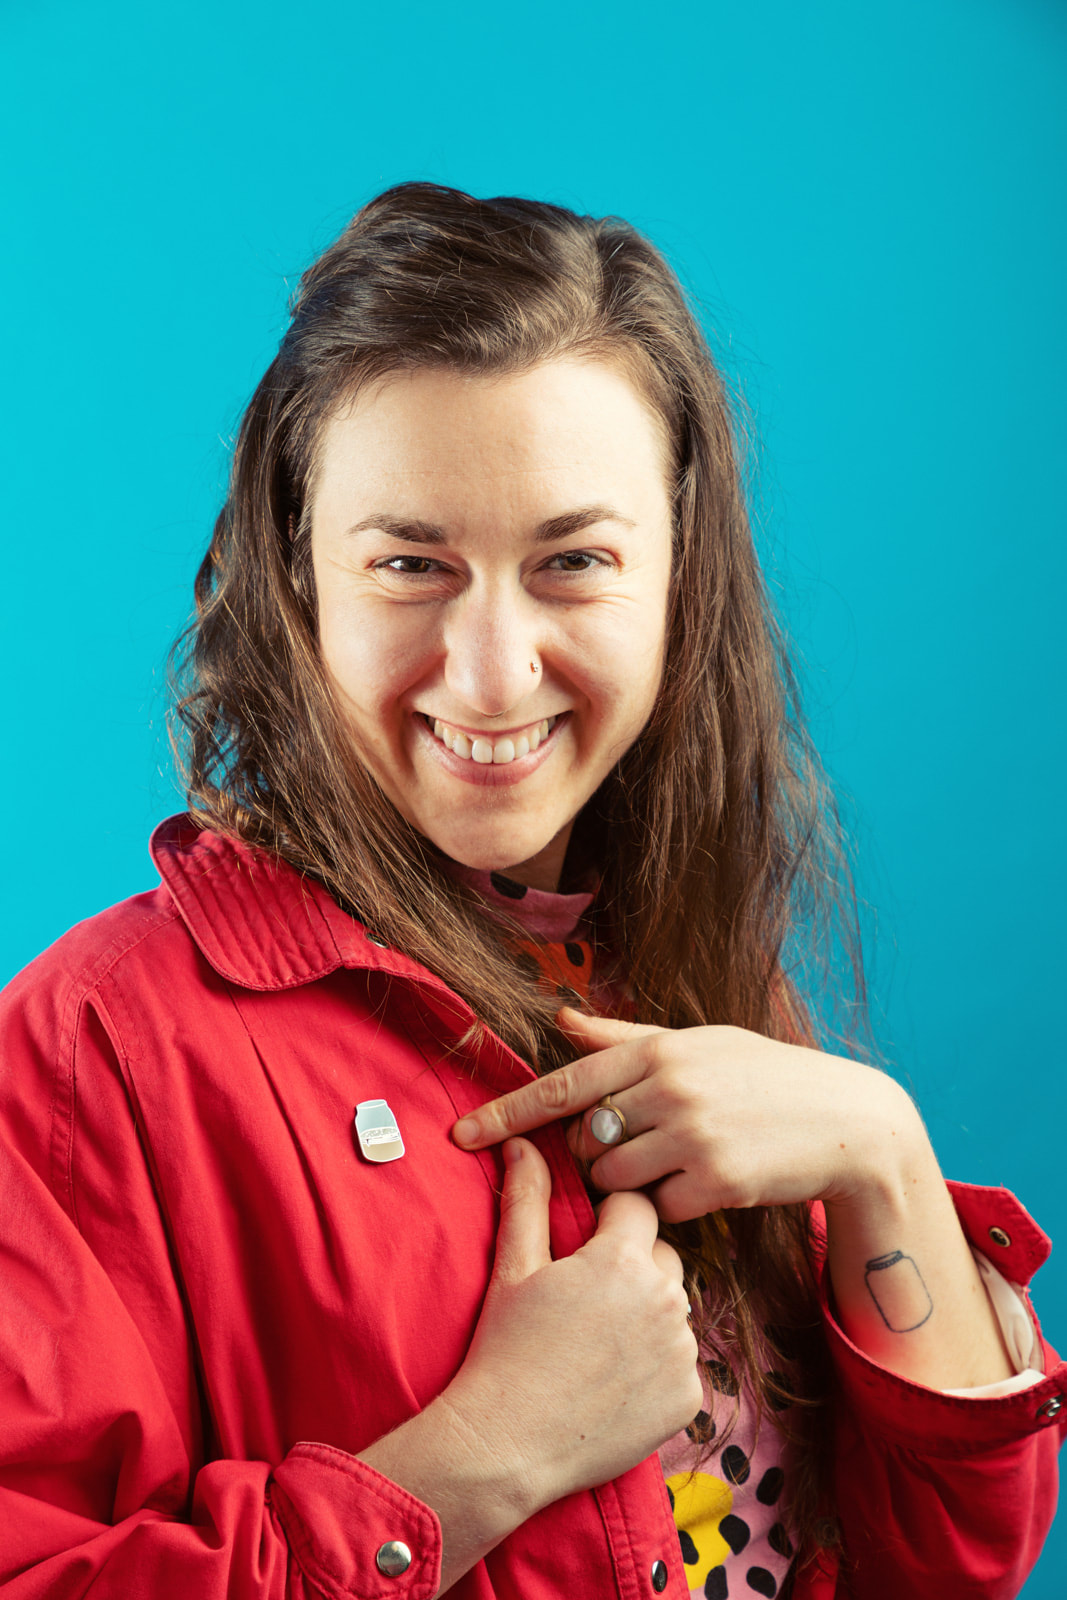 Woman with kombucha enamel pin on red jacket